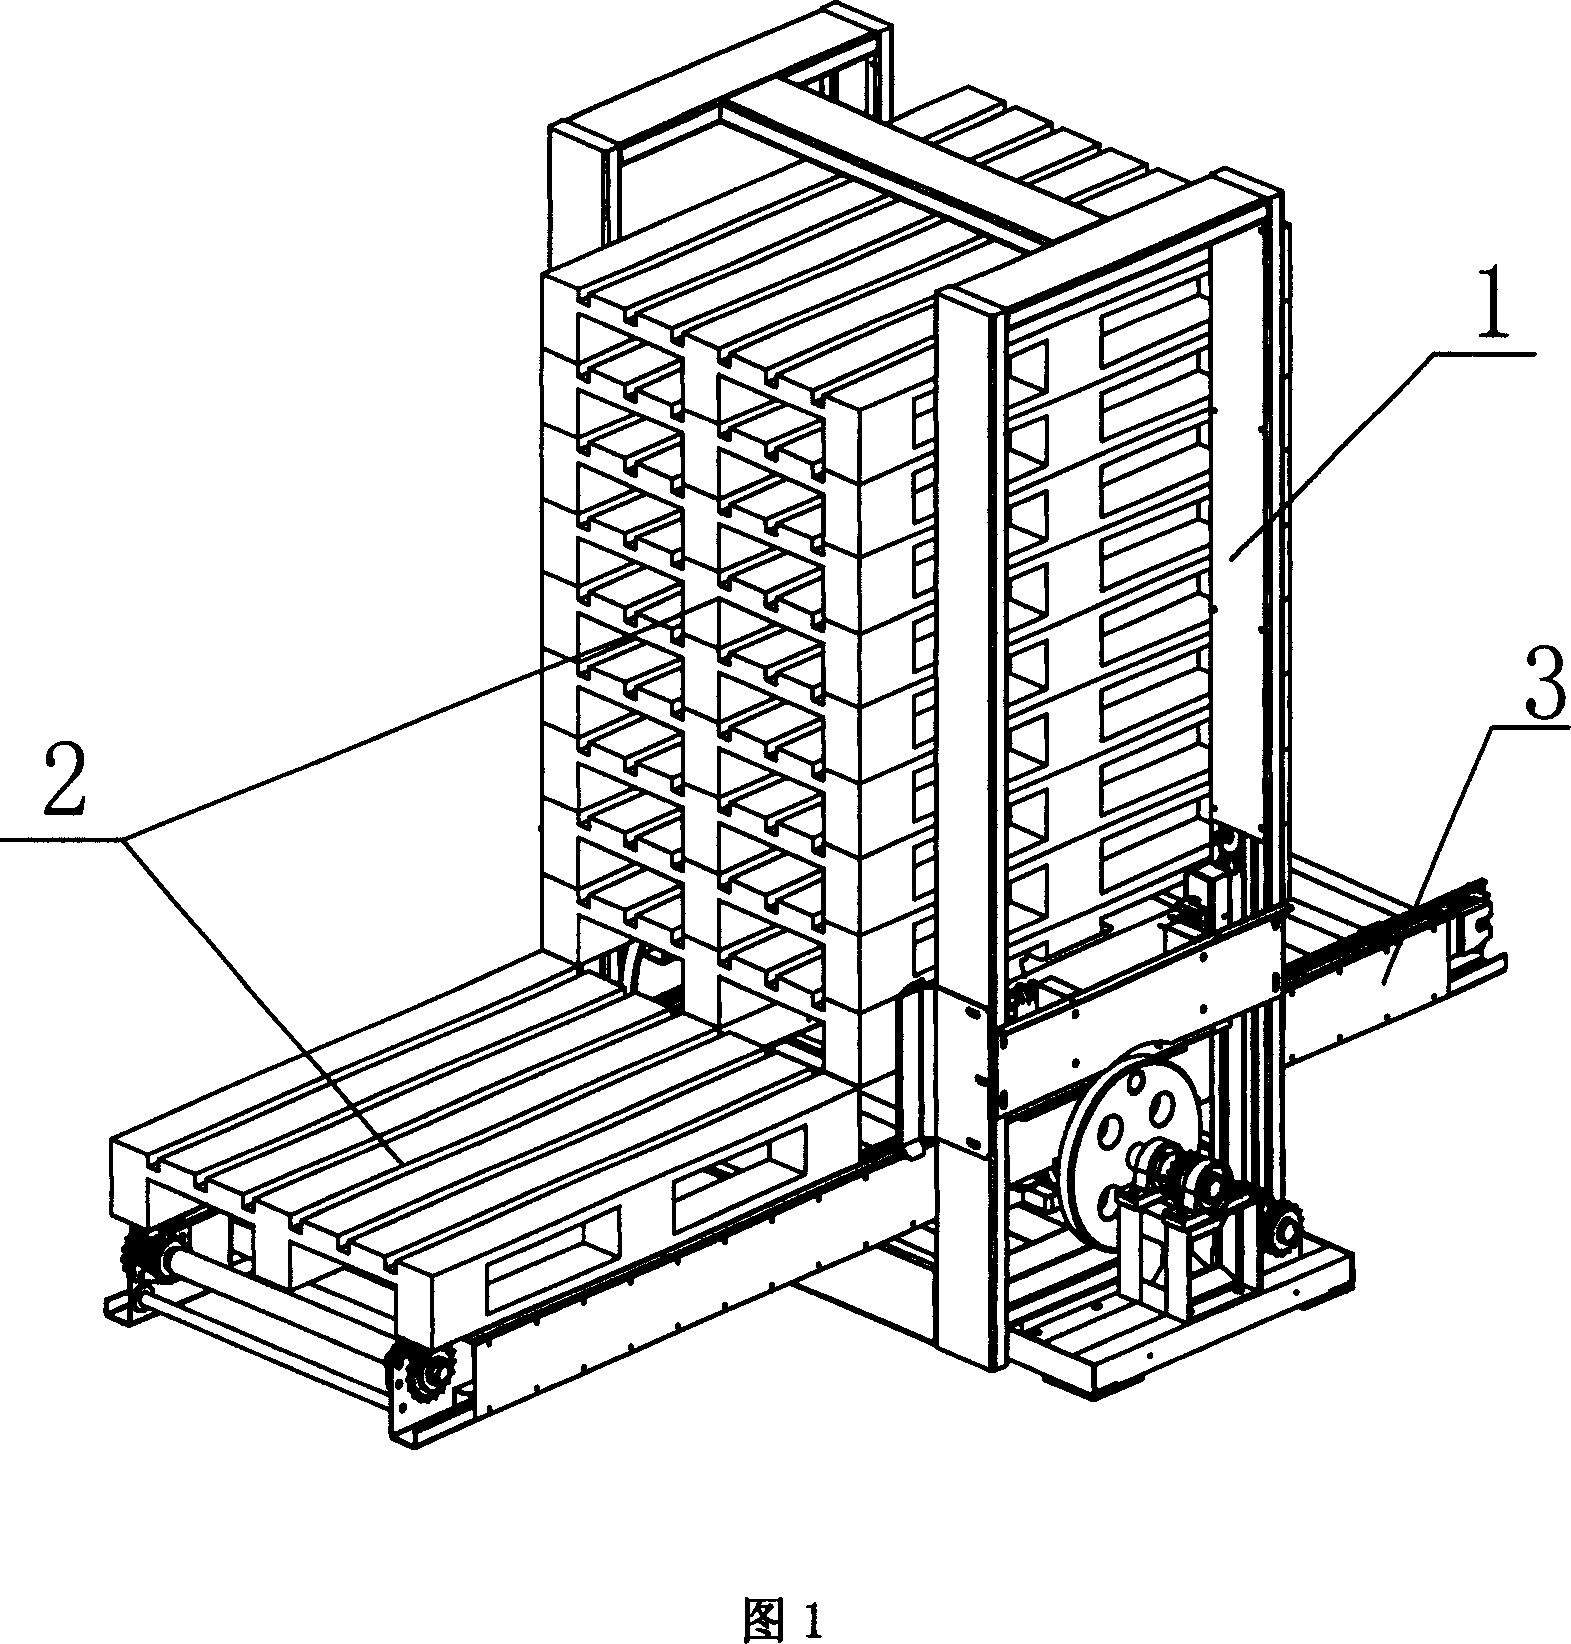 Hollow tray separator